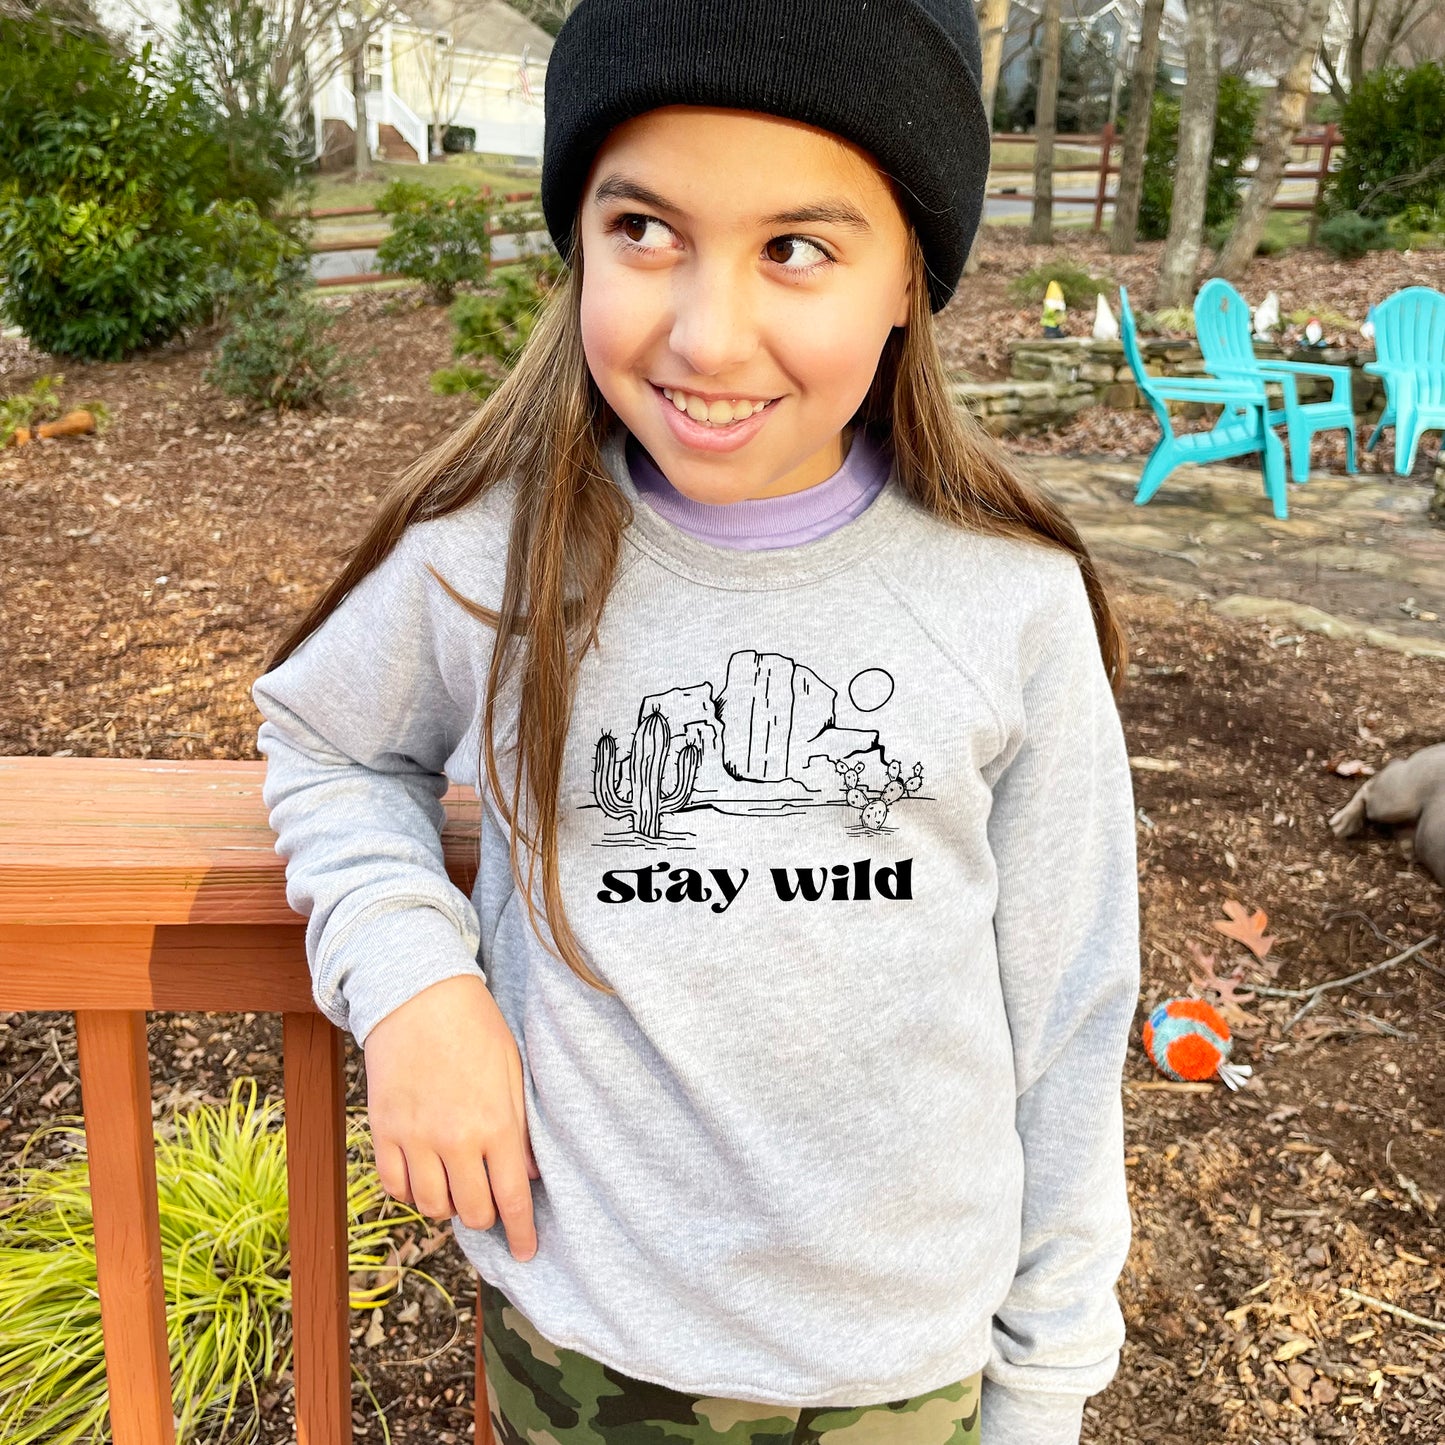 Stay Wild - Kid's Sweatshirt - Athletic Heather or Mauve